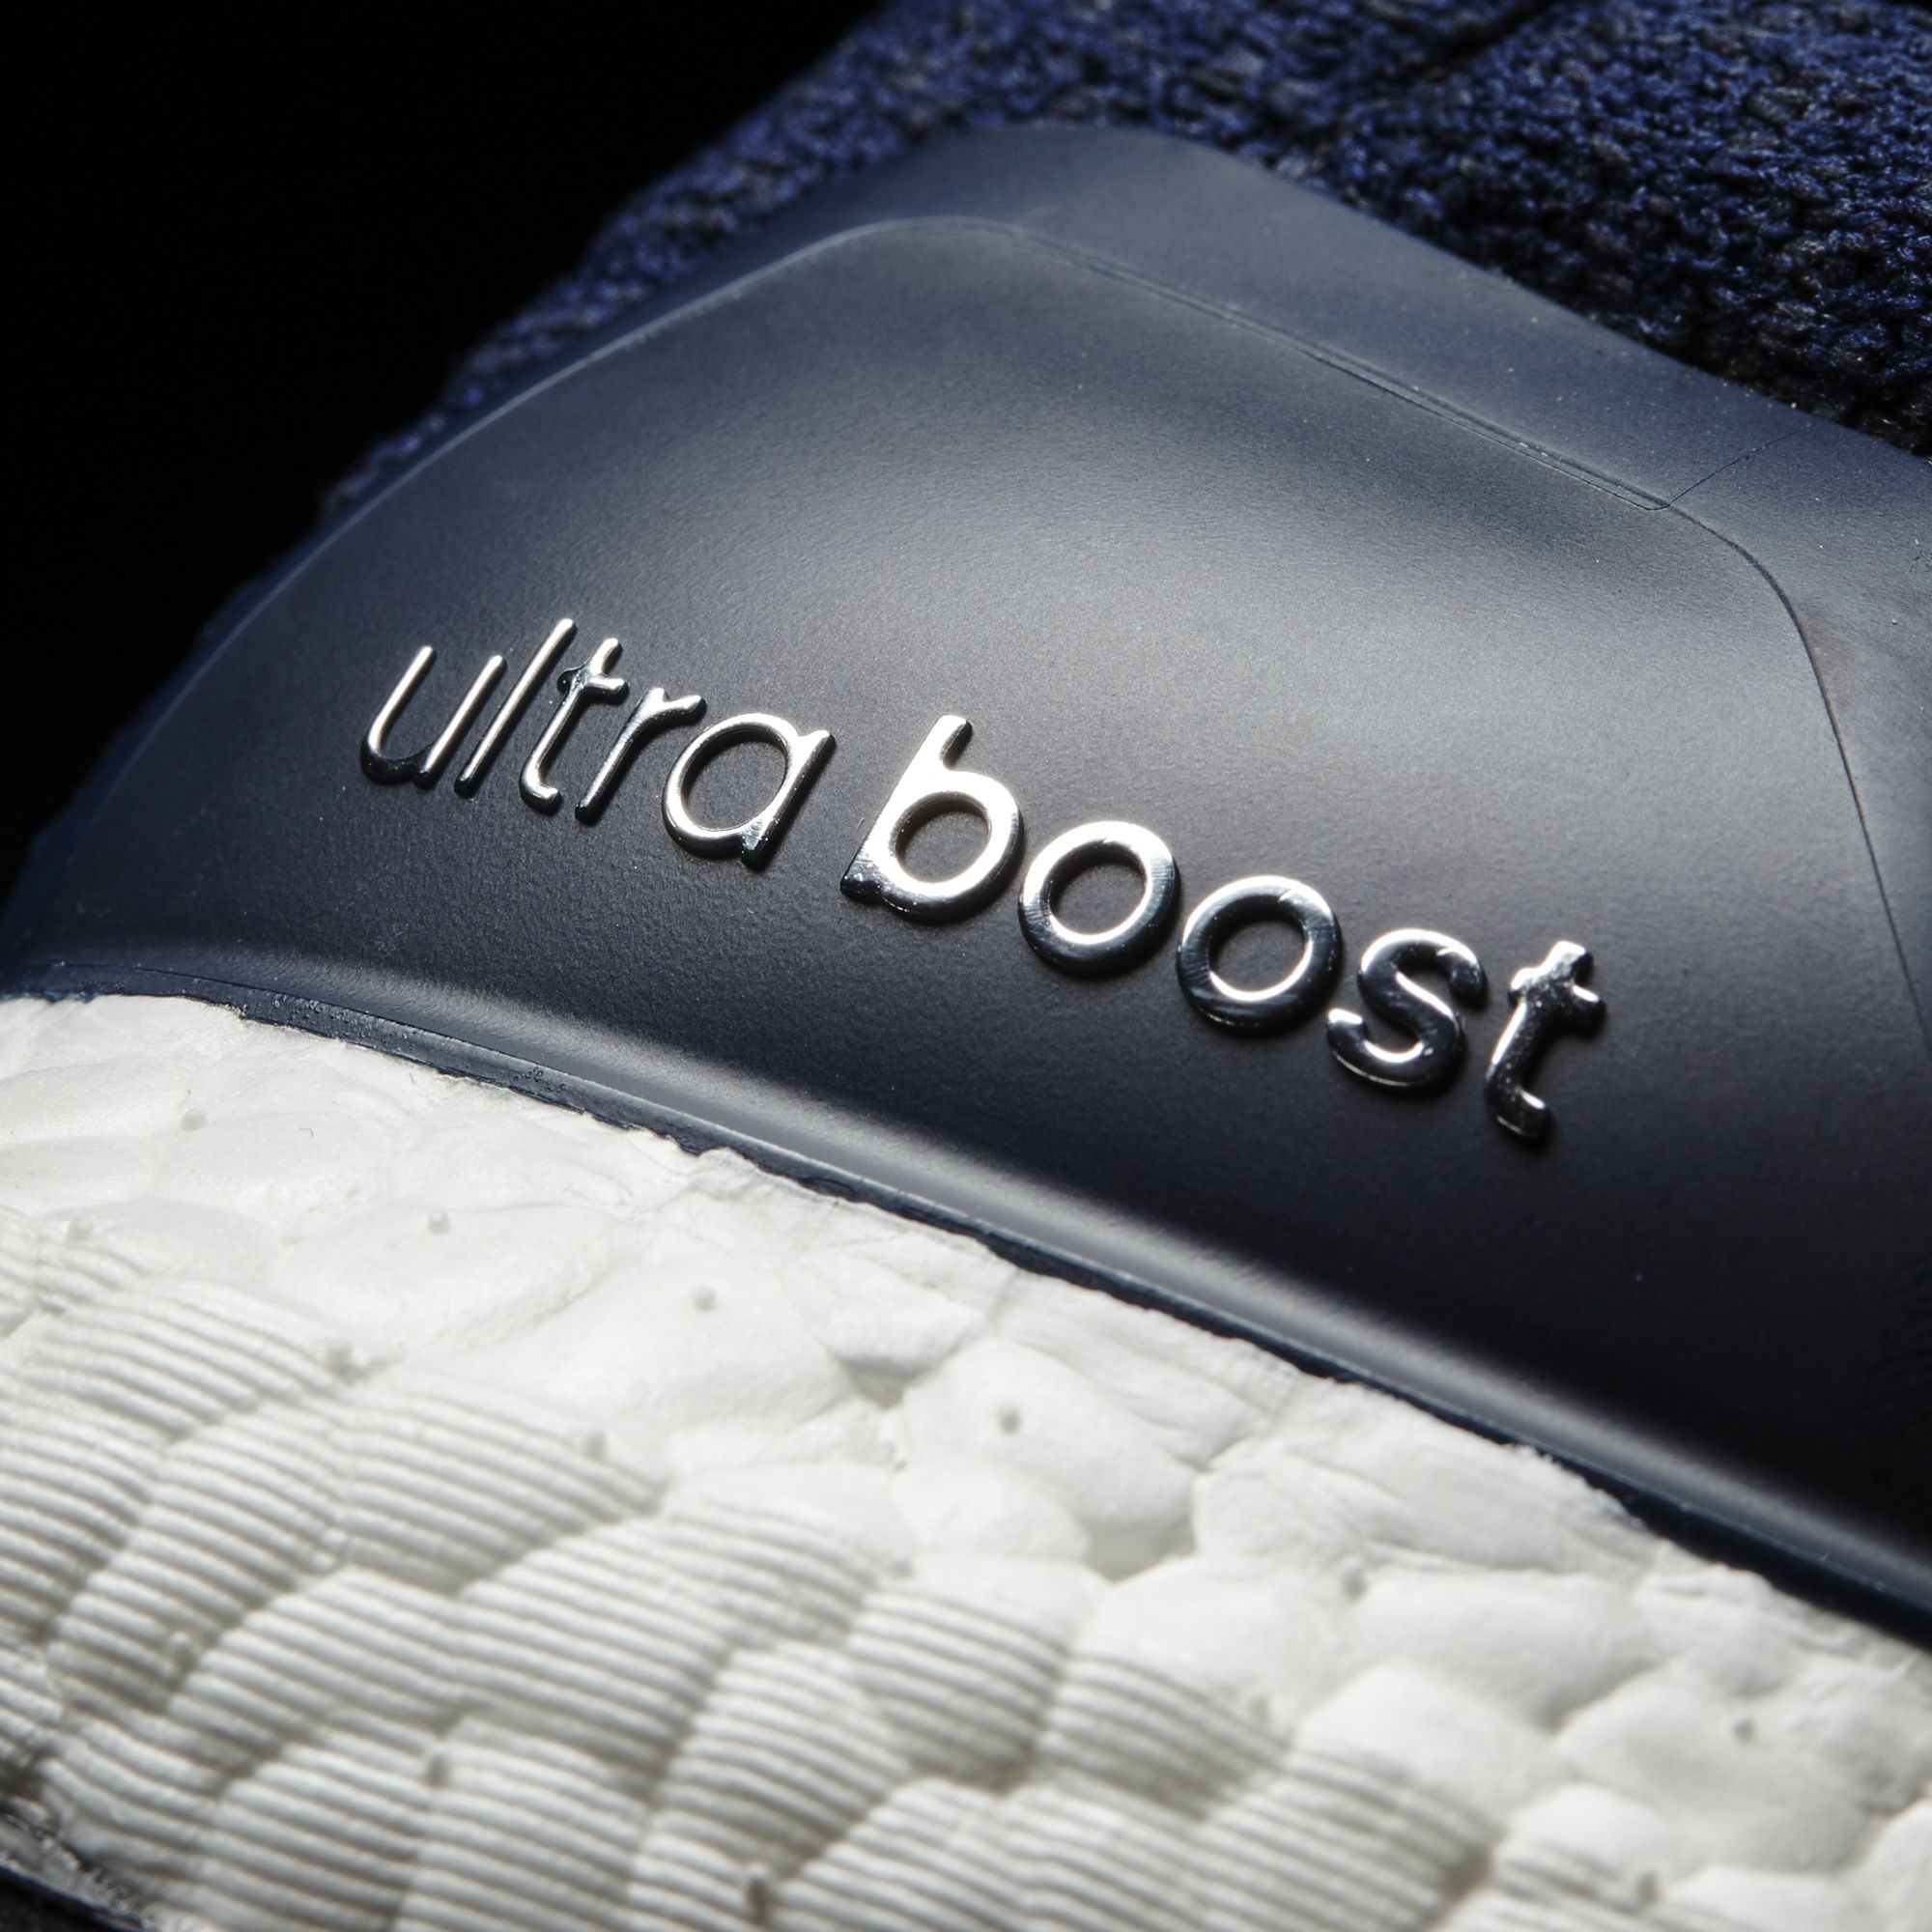 Adidas Ultra Boost 3.0
Collegiate Navy / Night Navy